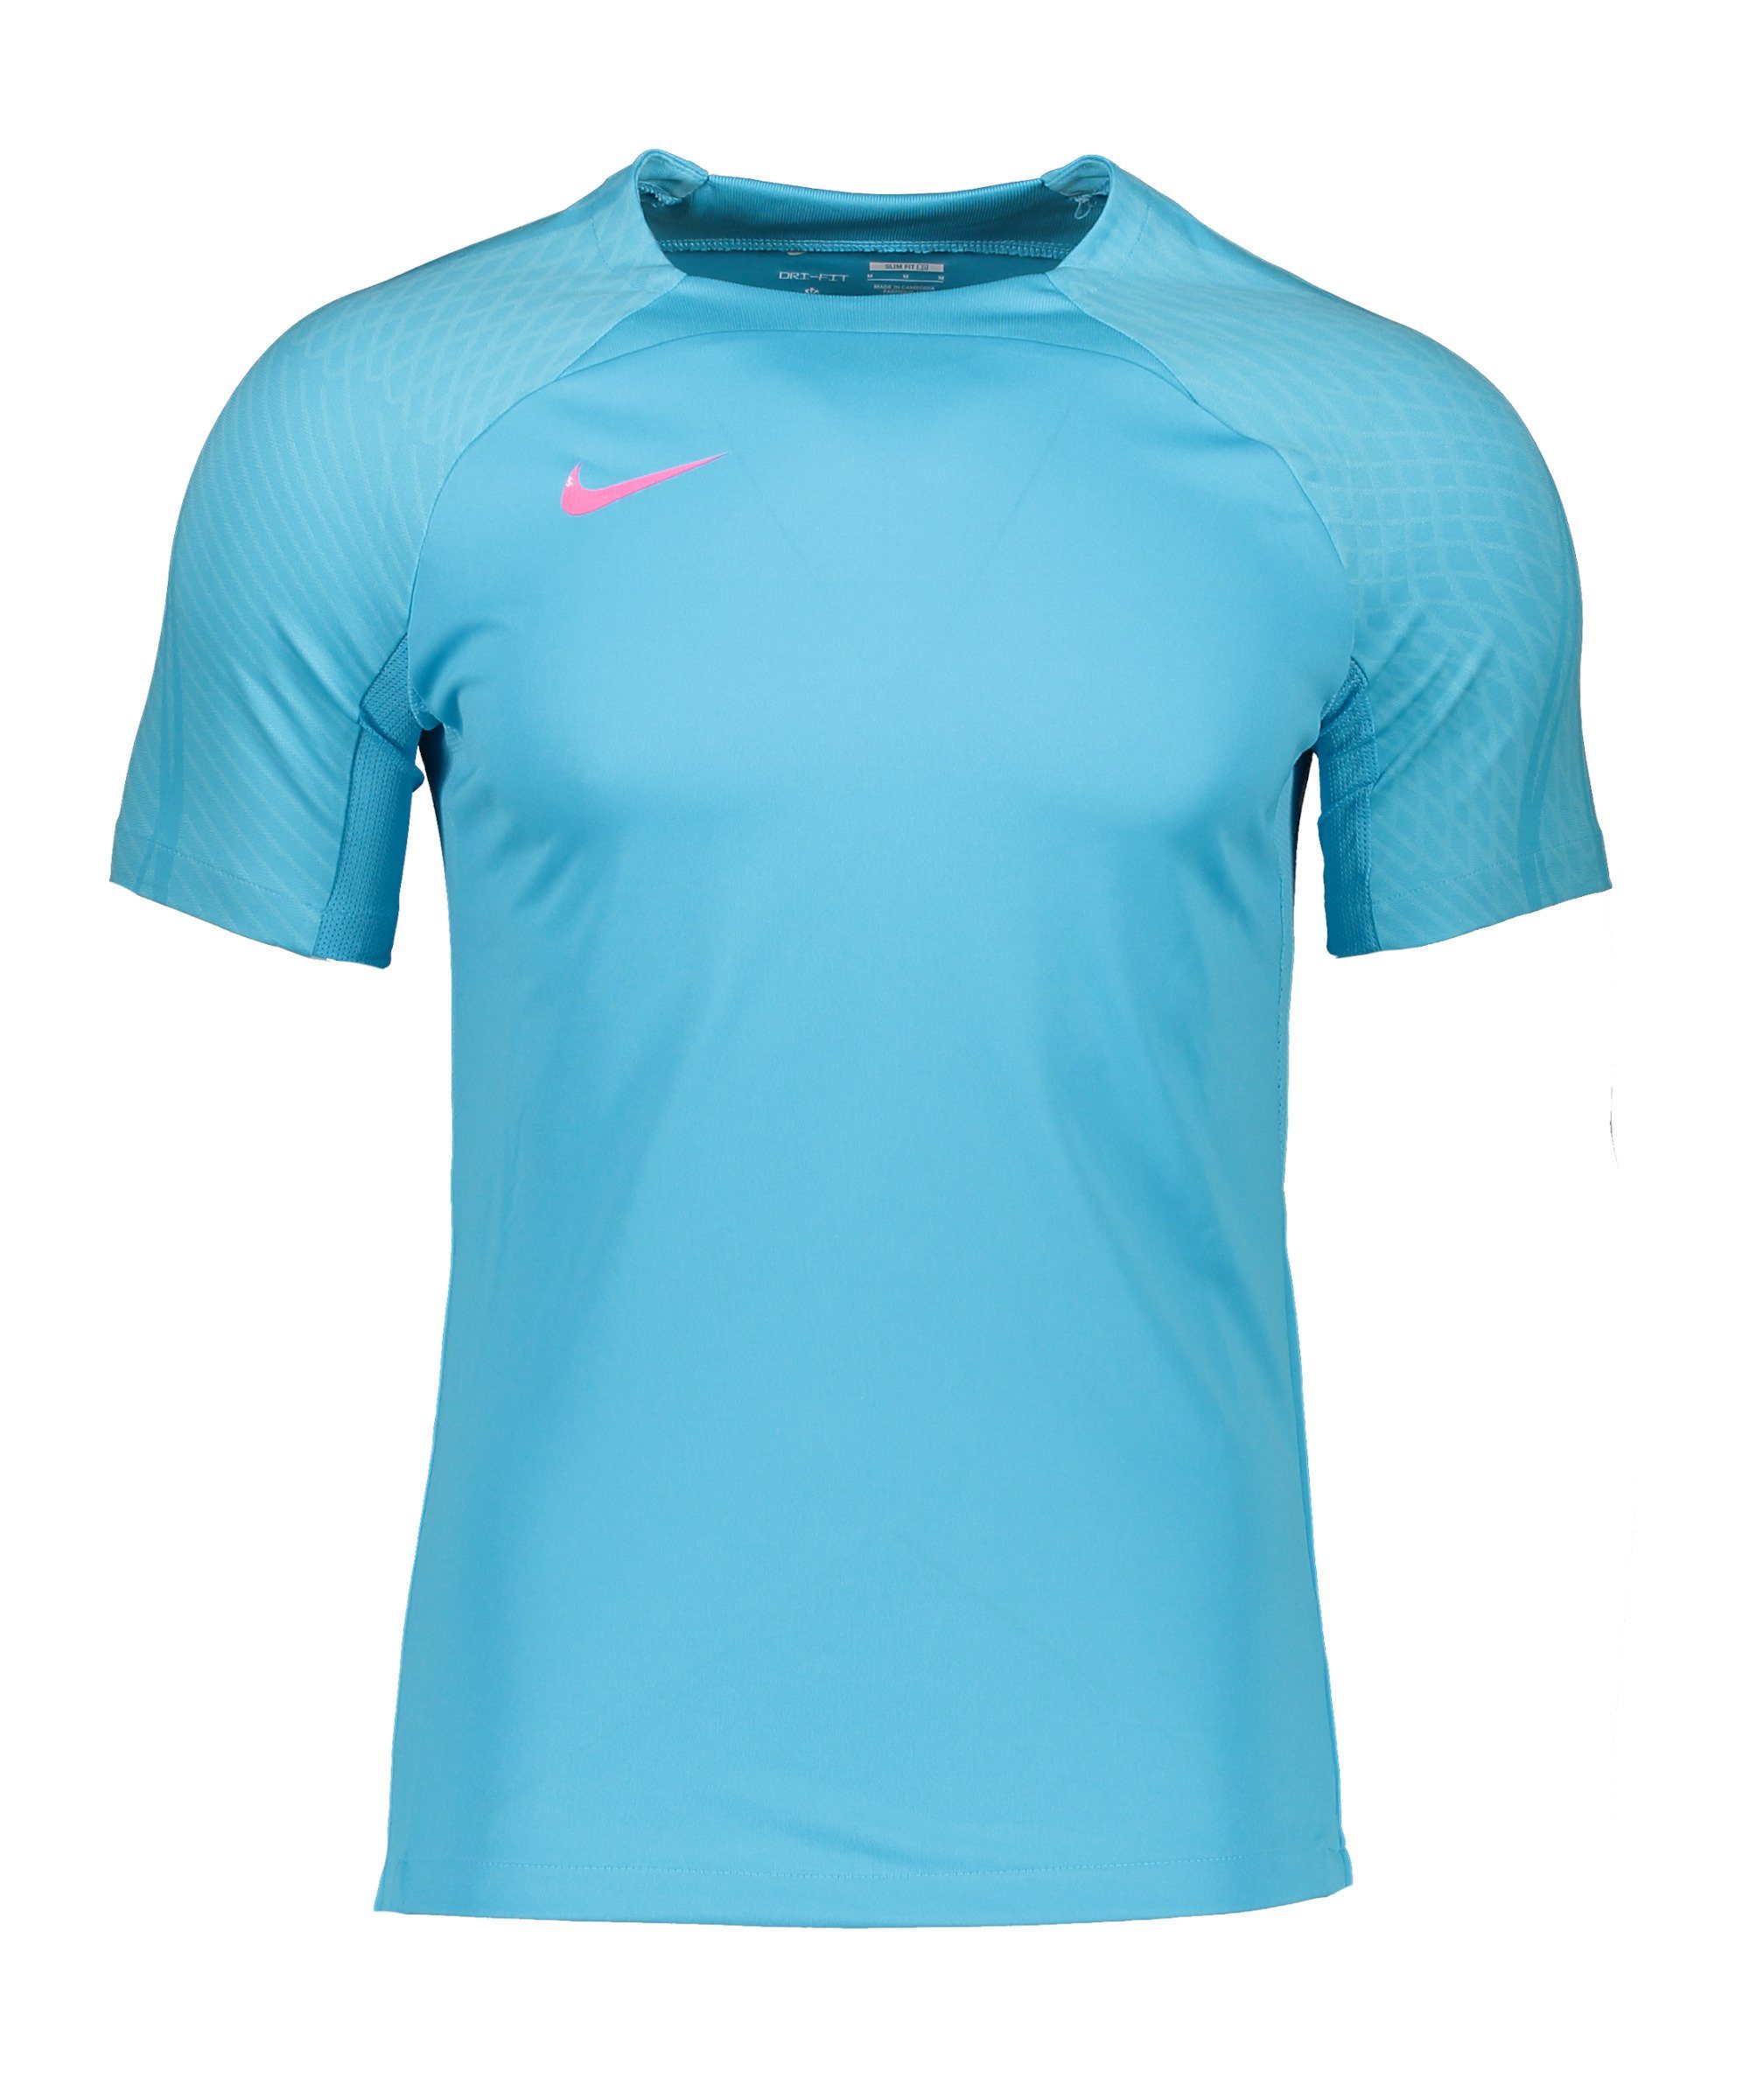 default blaublau Strike T-Shirt Nike Trainingsshirt